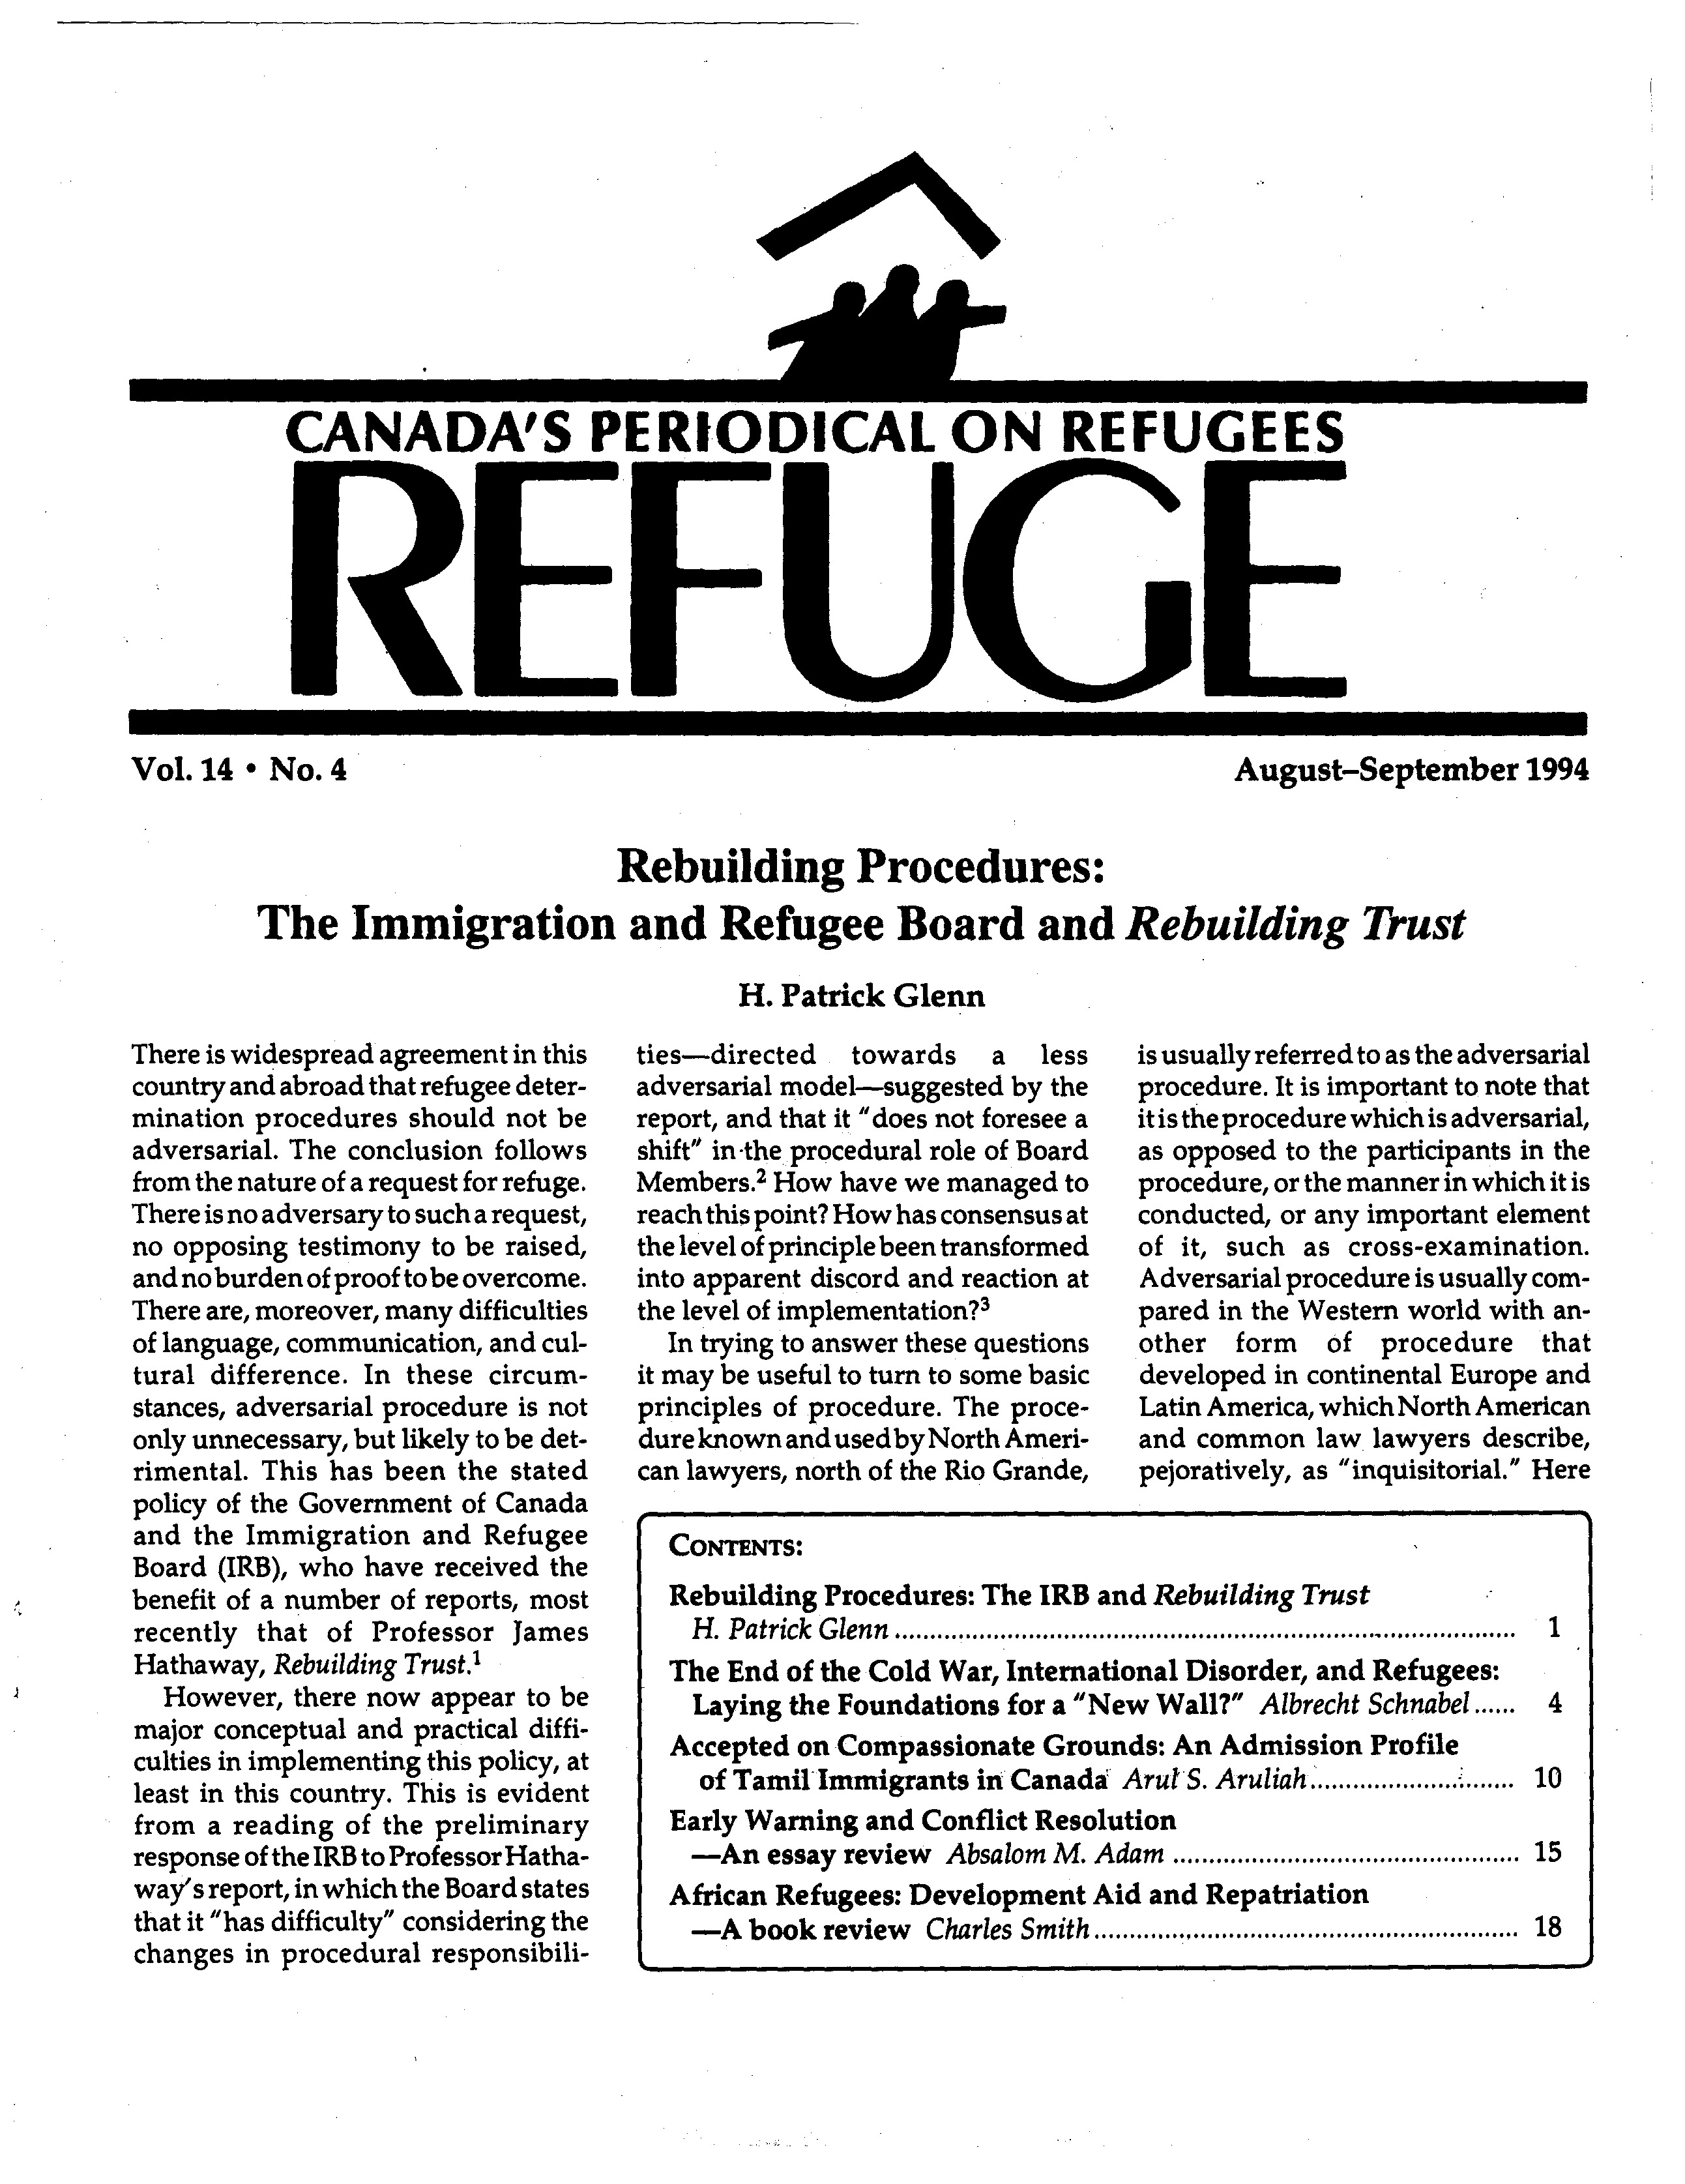 first page Refuge vol. 14.4 1994